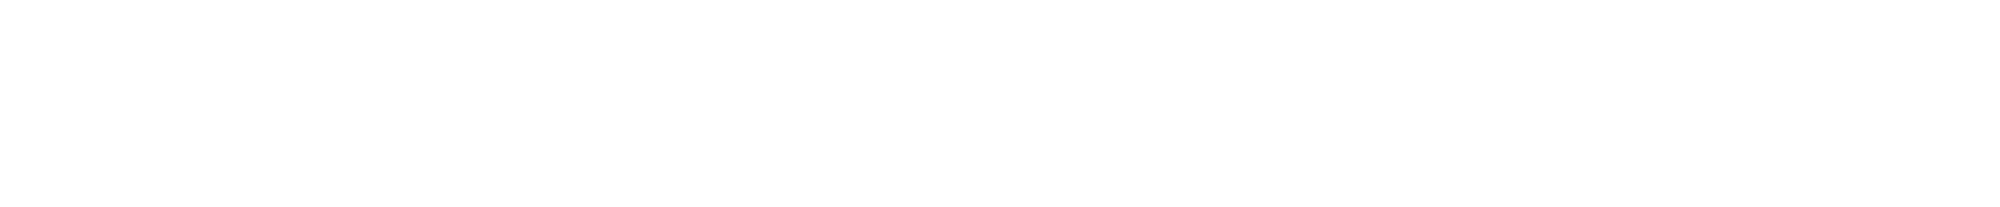 Nautilus Research Logo